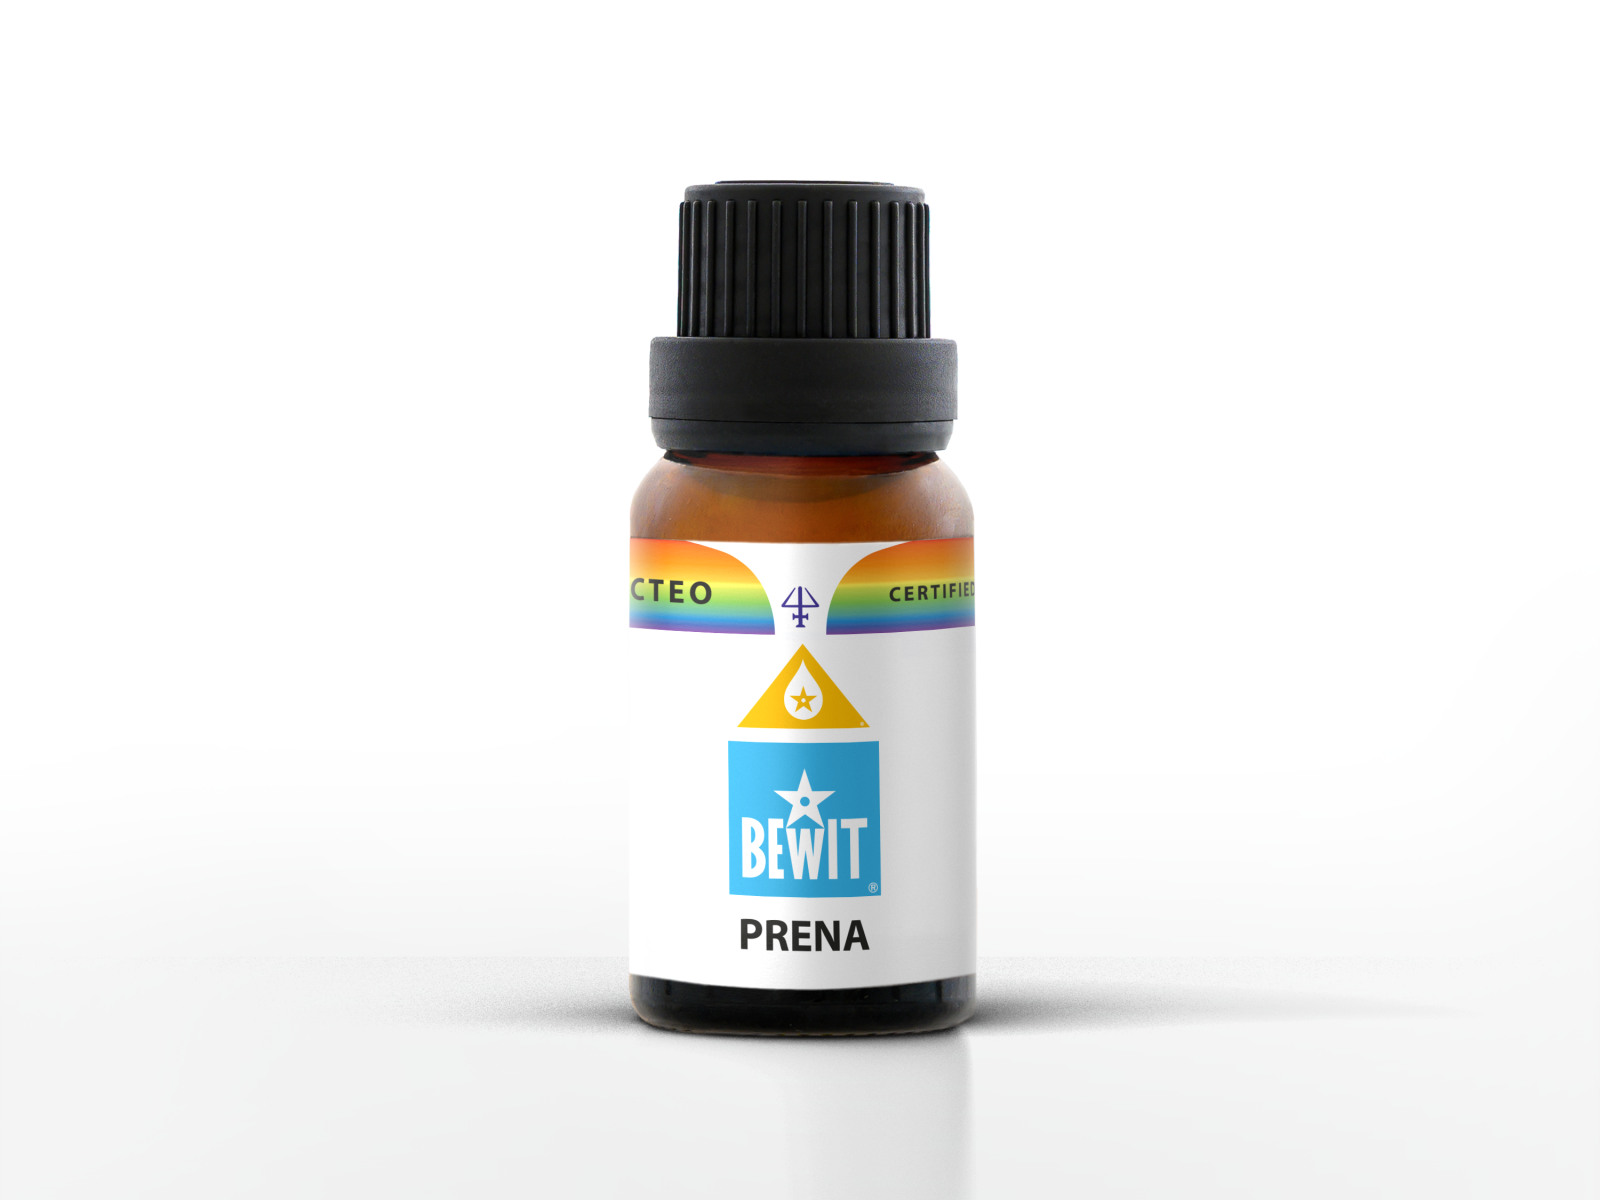 BEWIT PRENA - Blend of essential oils